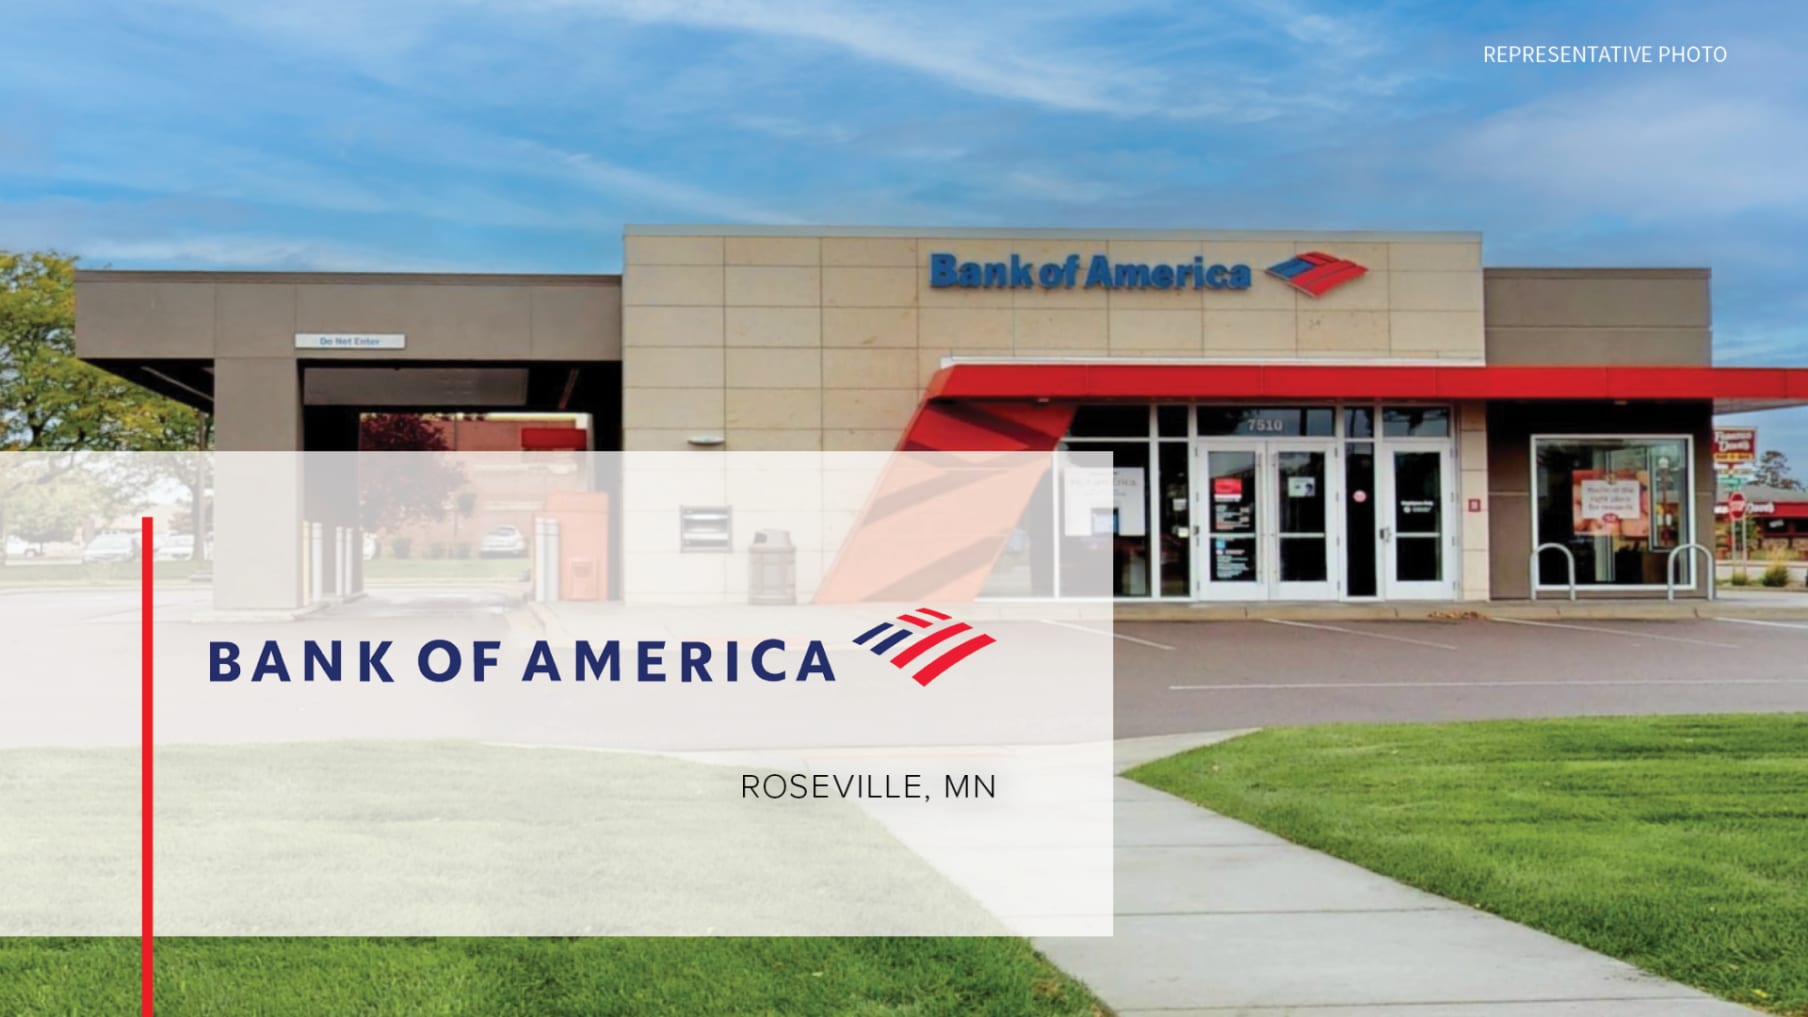 Bank of America - Roseville_販売物件